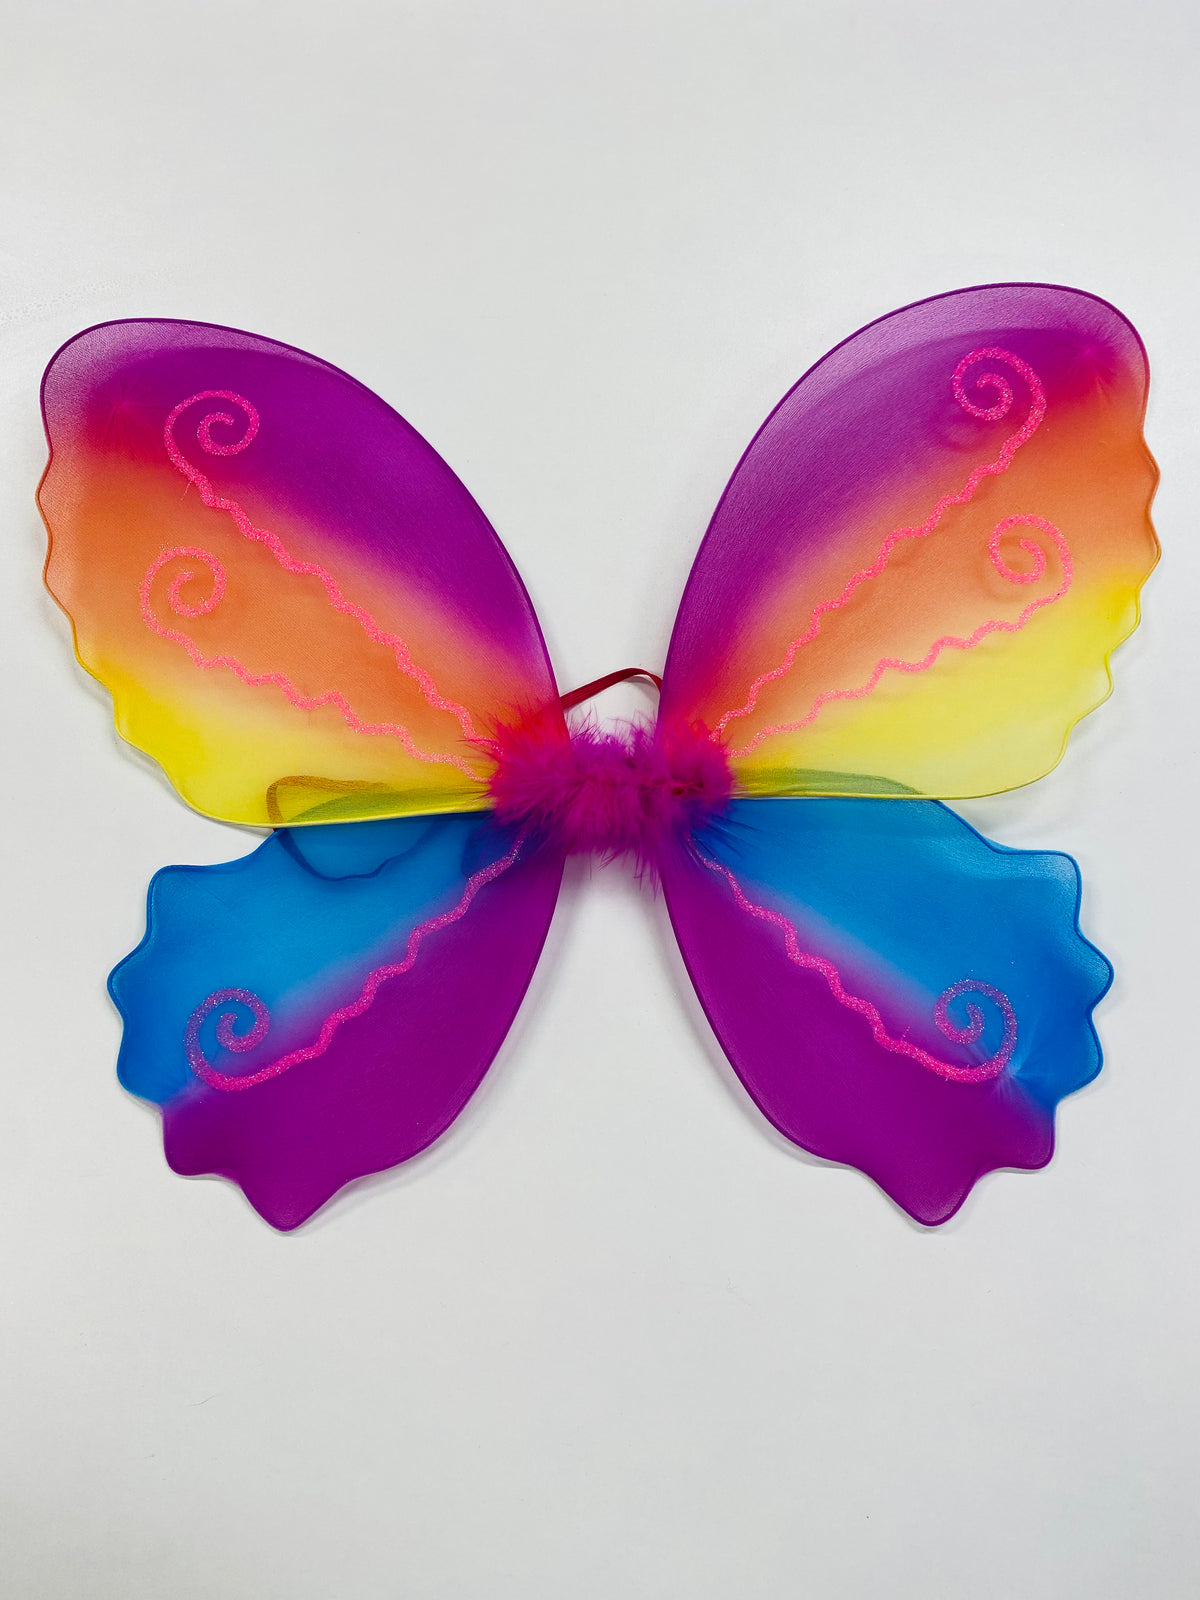 Rainbow Fairy Wings